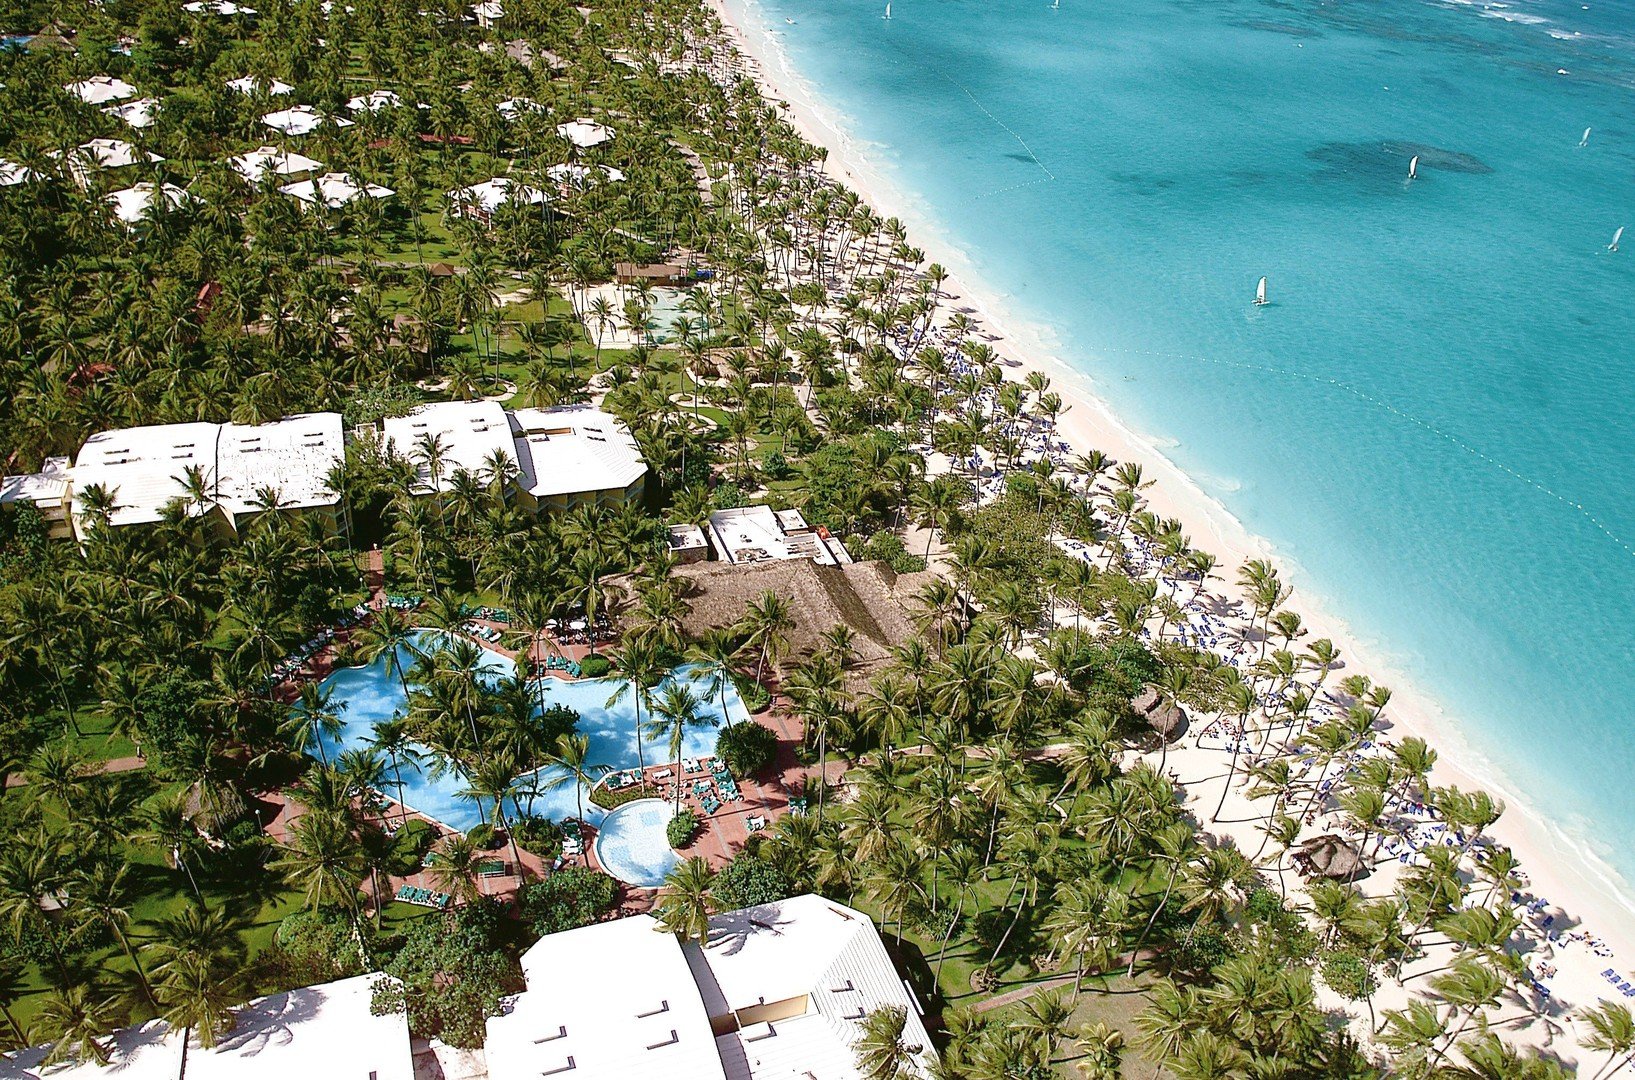 Grand Palladium Punta Cana Resort And Spa